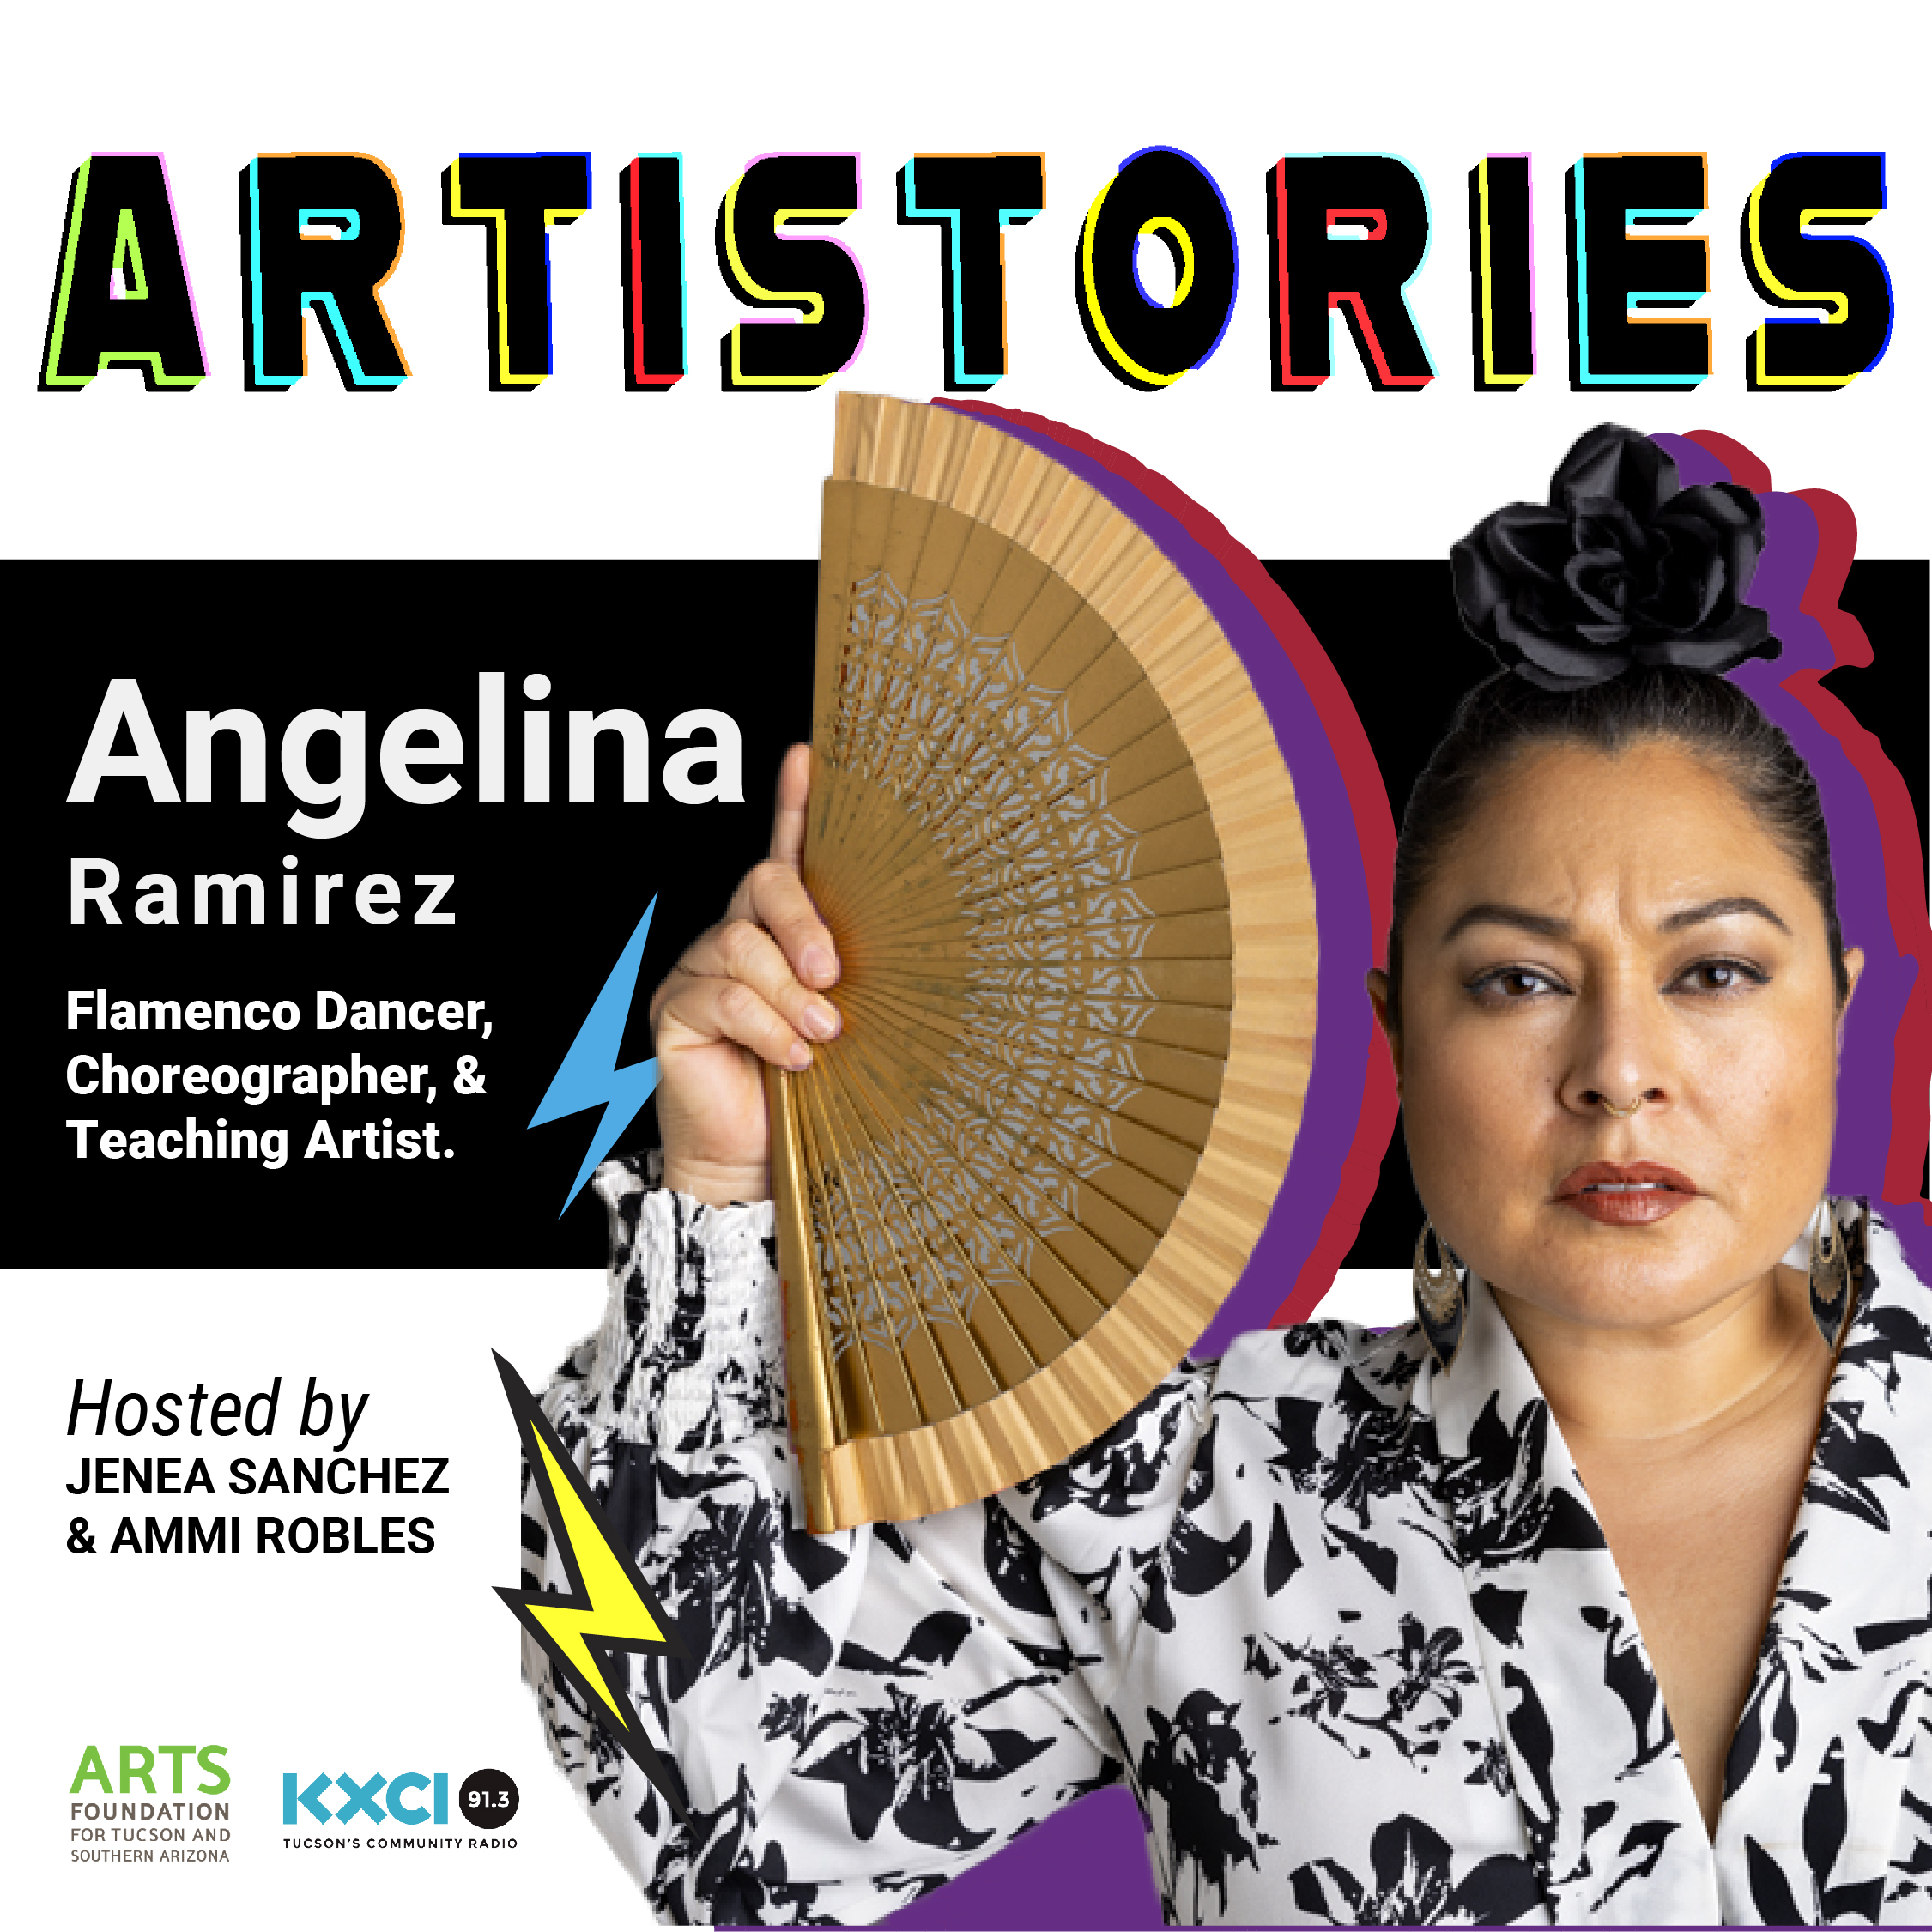 Angelina Ramirez - Flamenco Dancer, Choreographer, and Teaching Artist